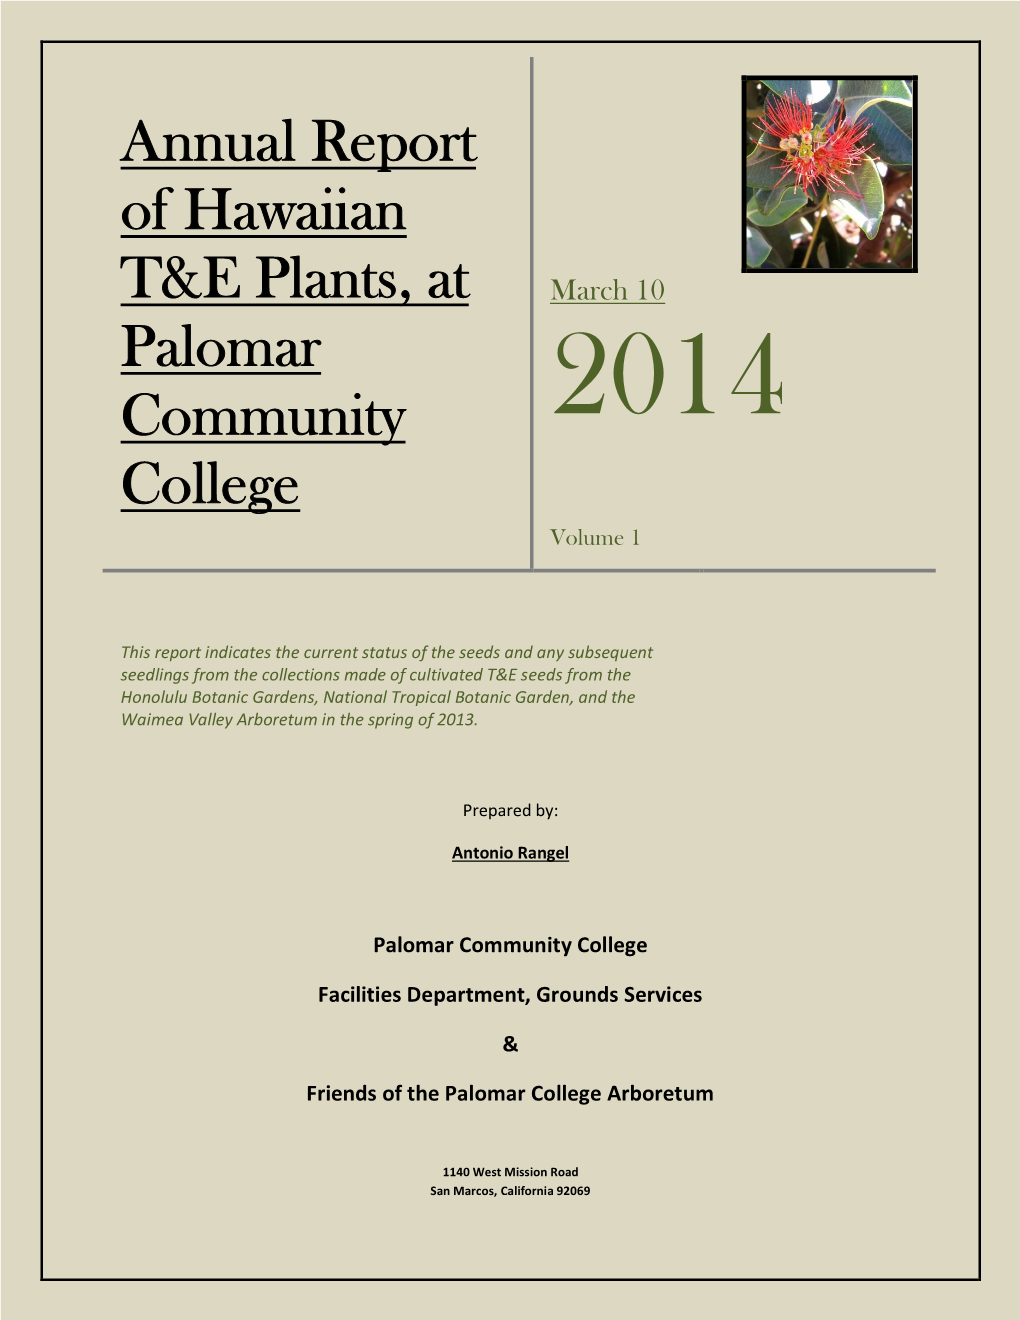 Annual Report of Hawaiian T&E Plants, At